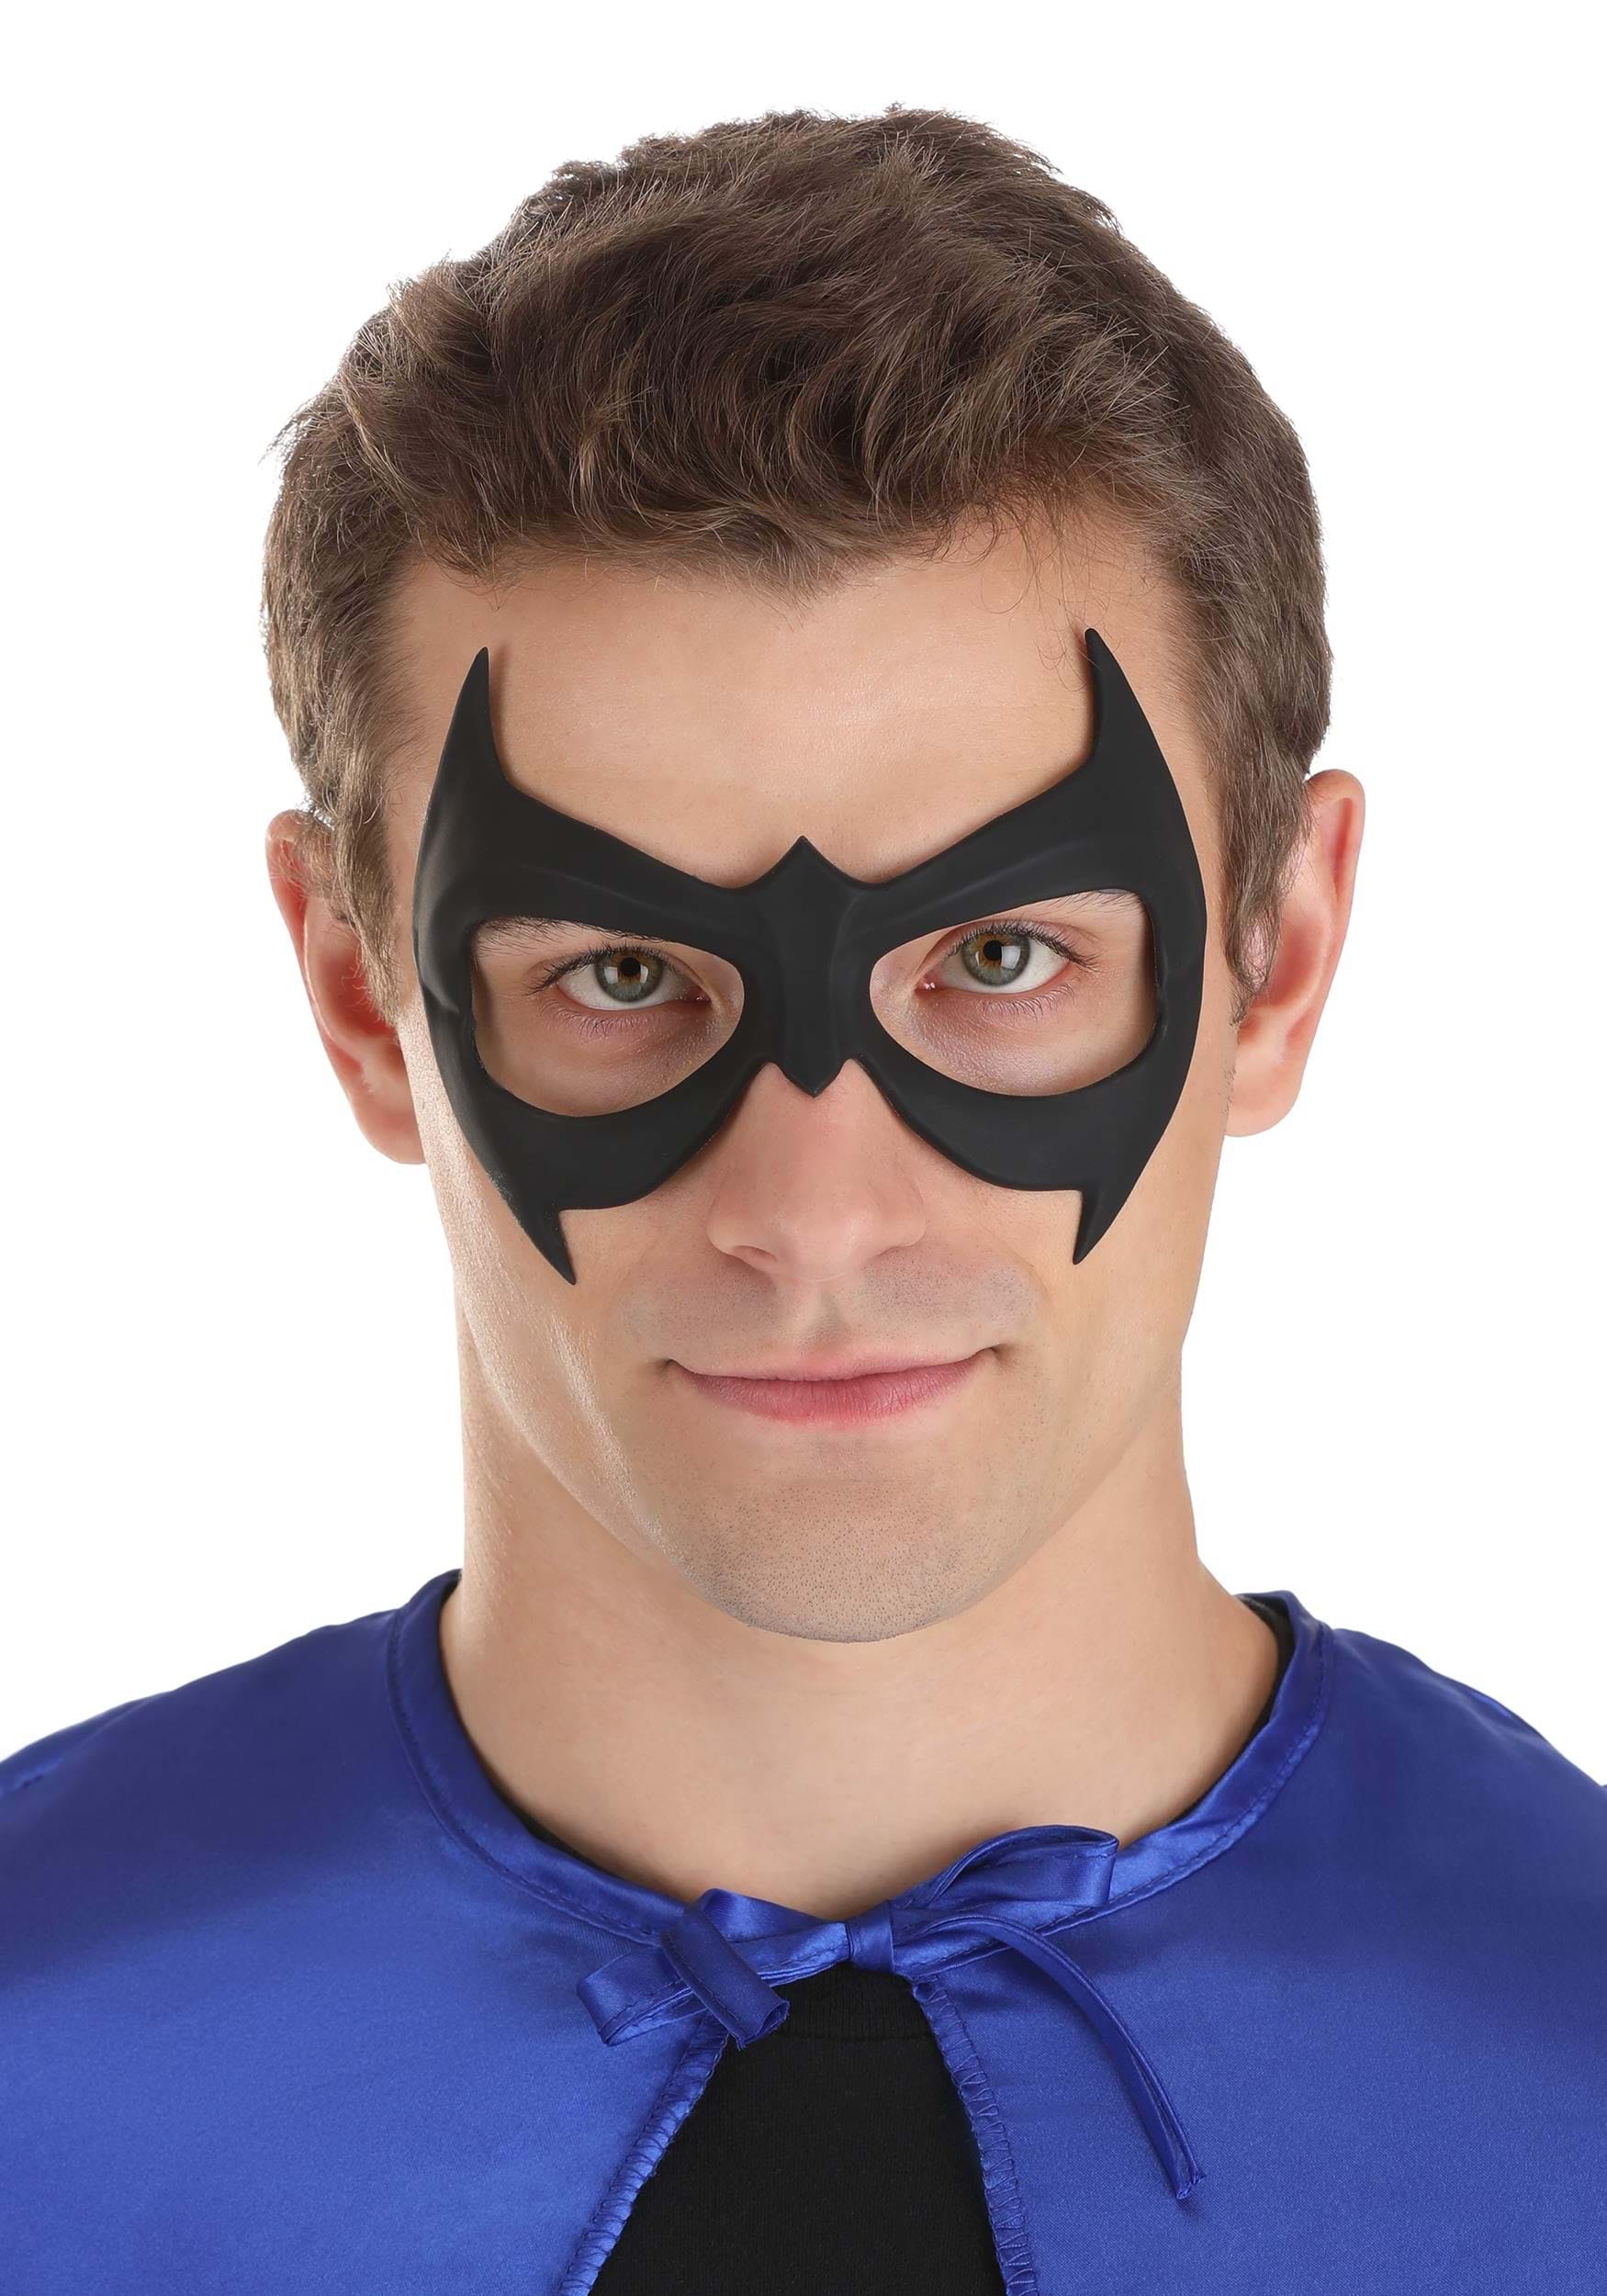 cool superhero masks